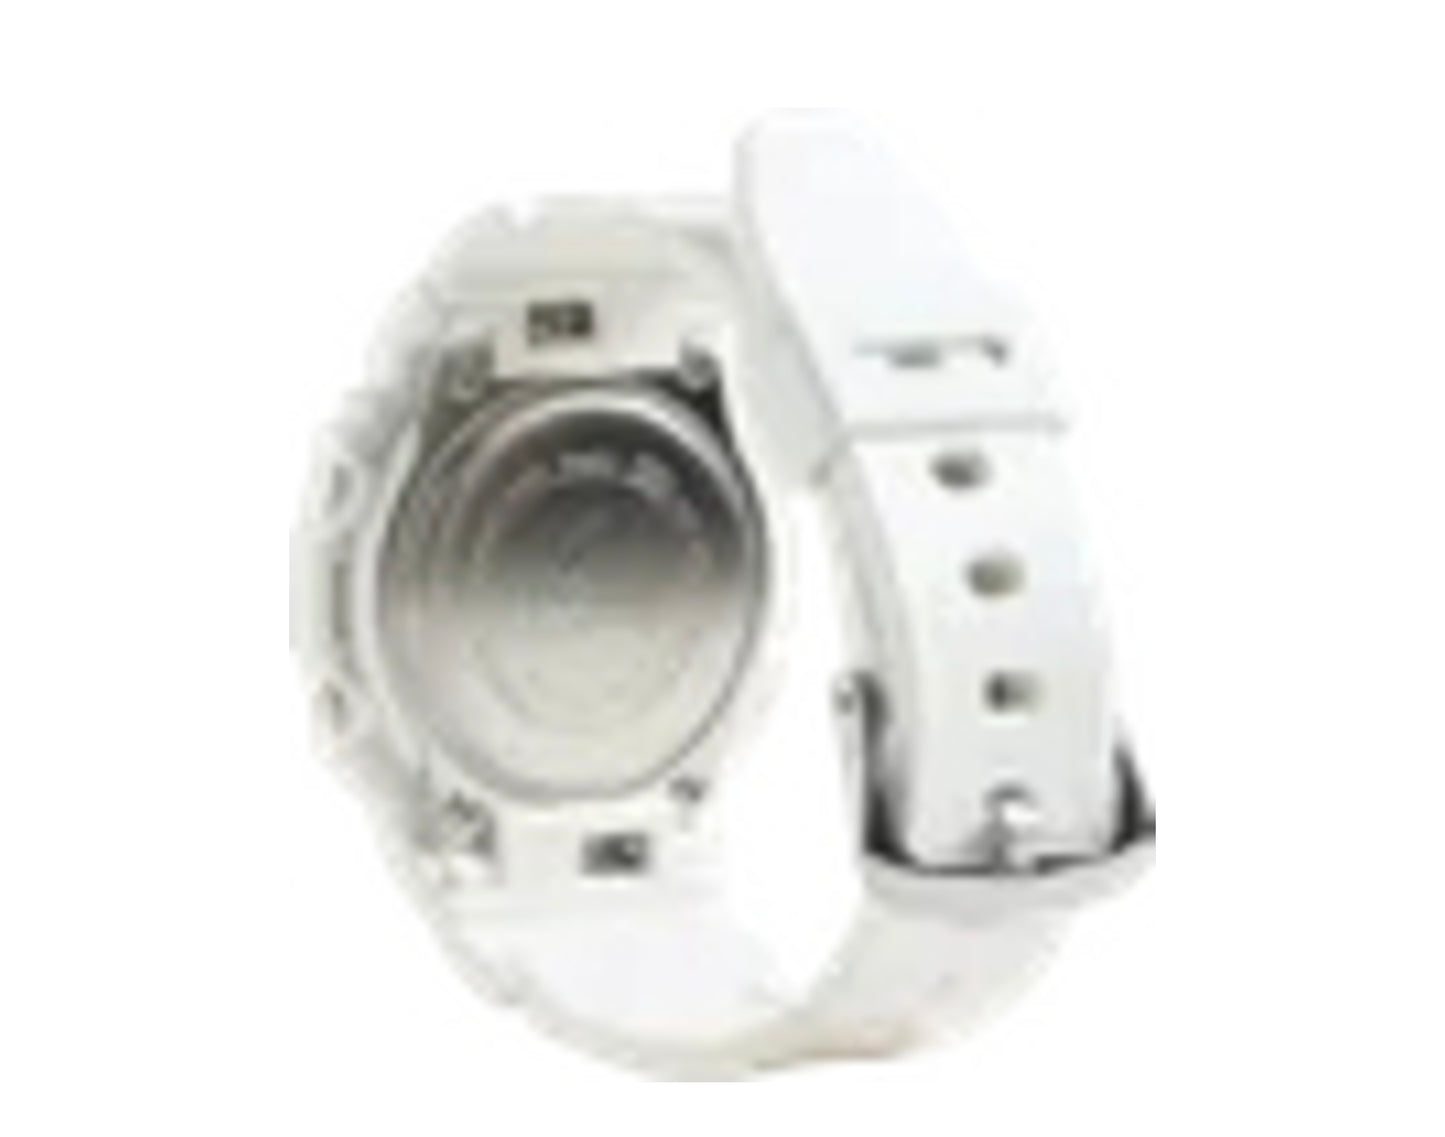 Casio G-Shock Baby-G BGD565 Shock Digital Resin Watch